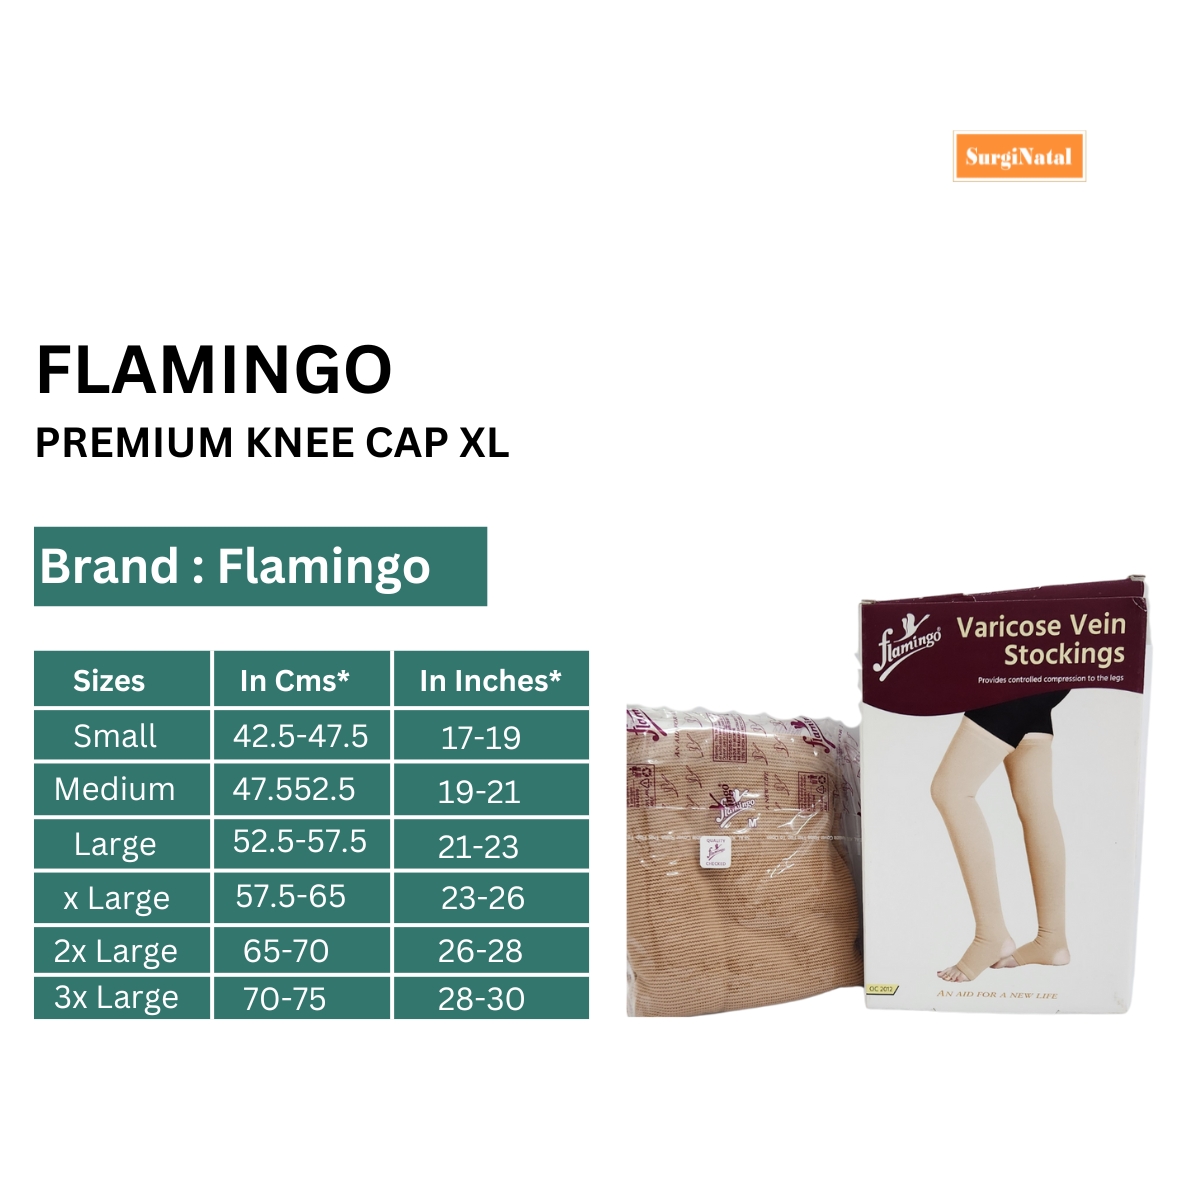 flamingo varicose vein stockings large